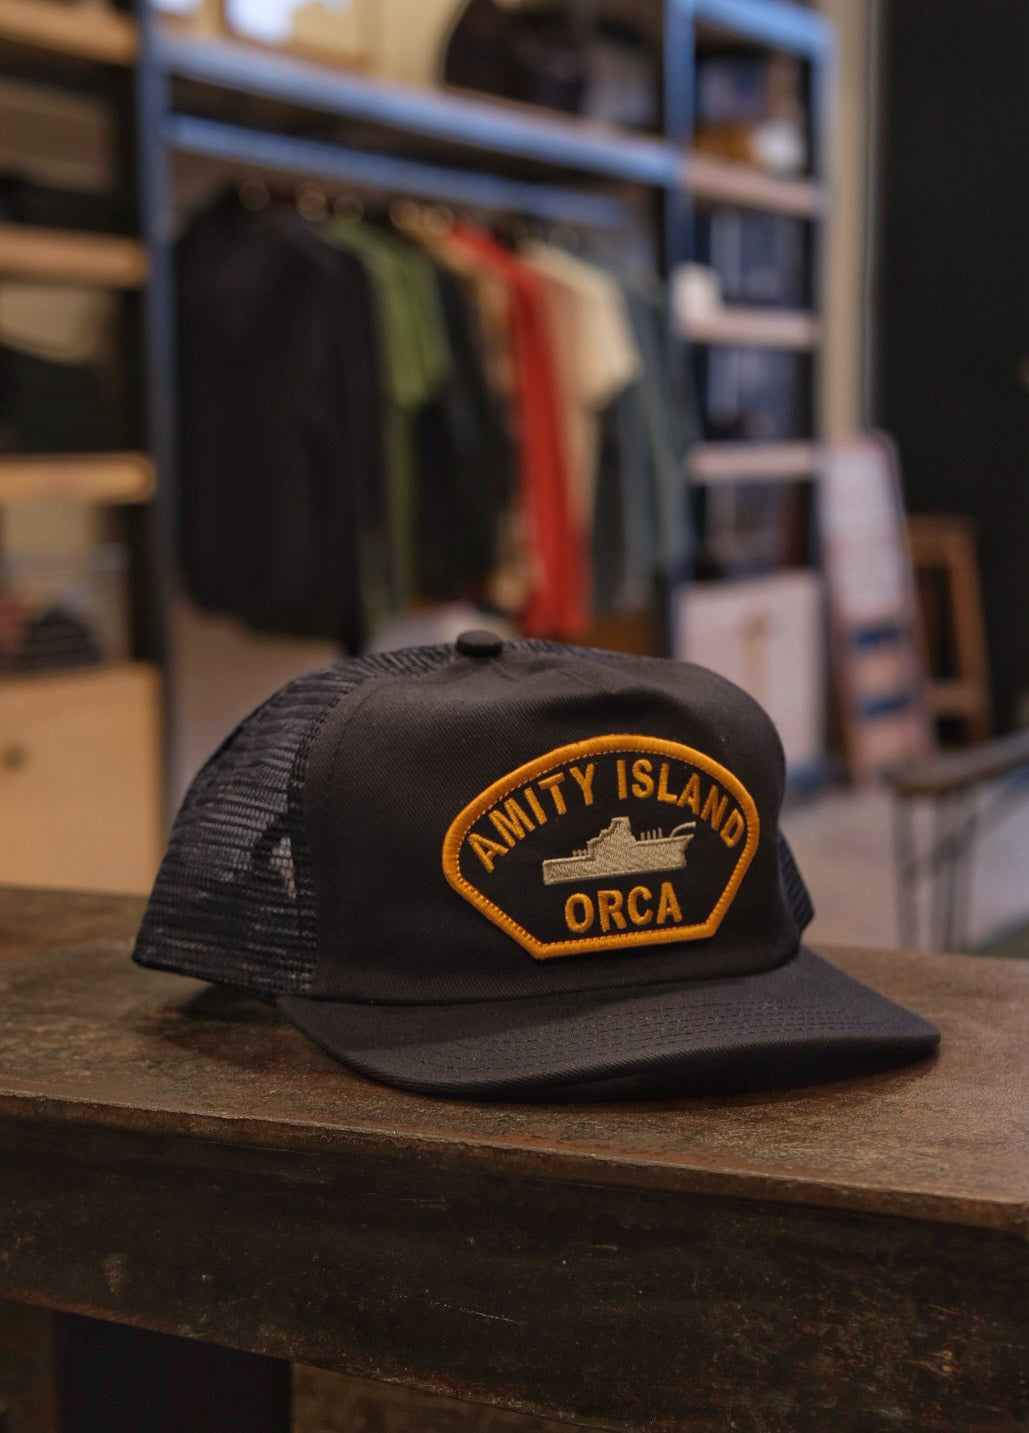 Amity Island Orca Trucker Hat in Navy